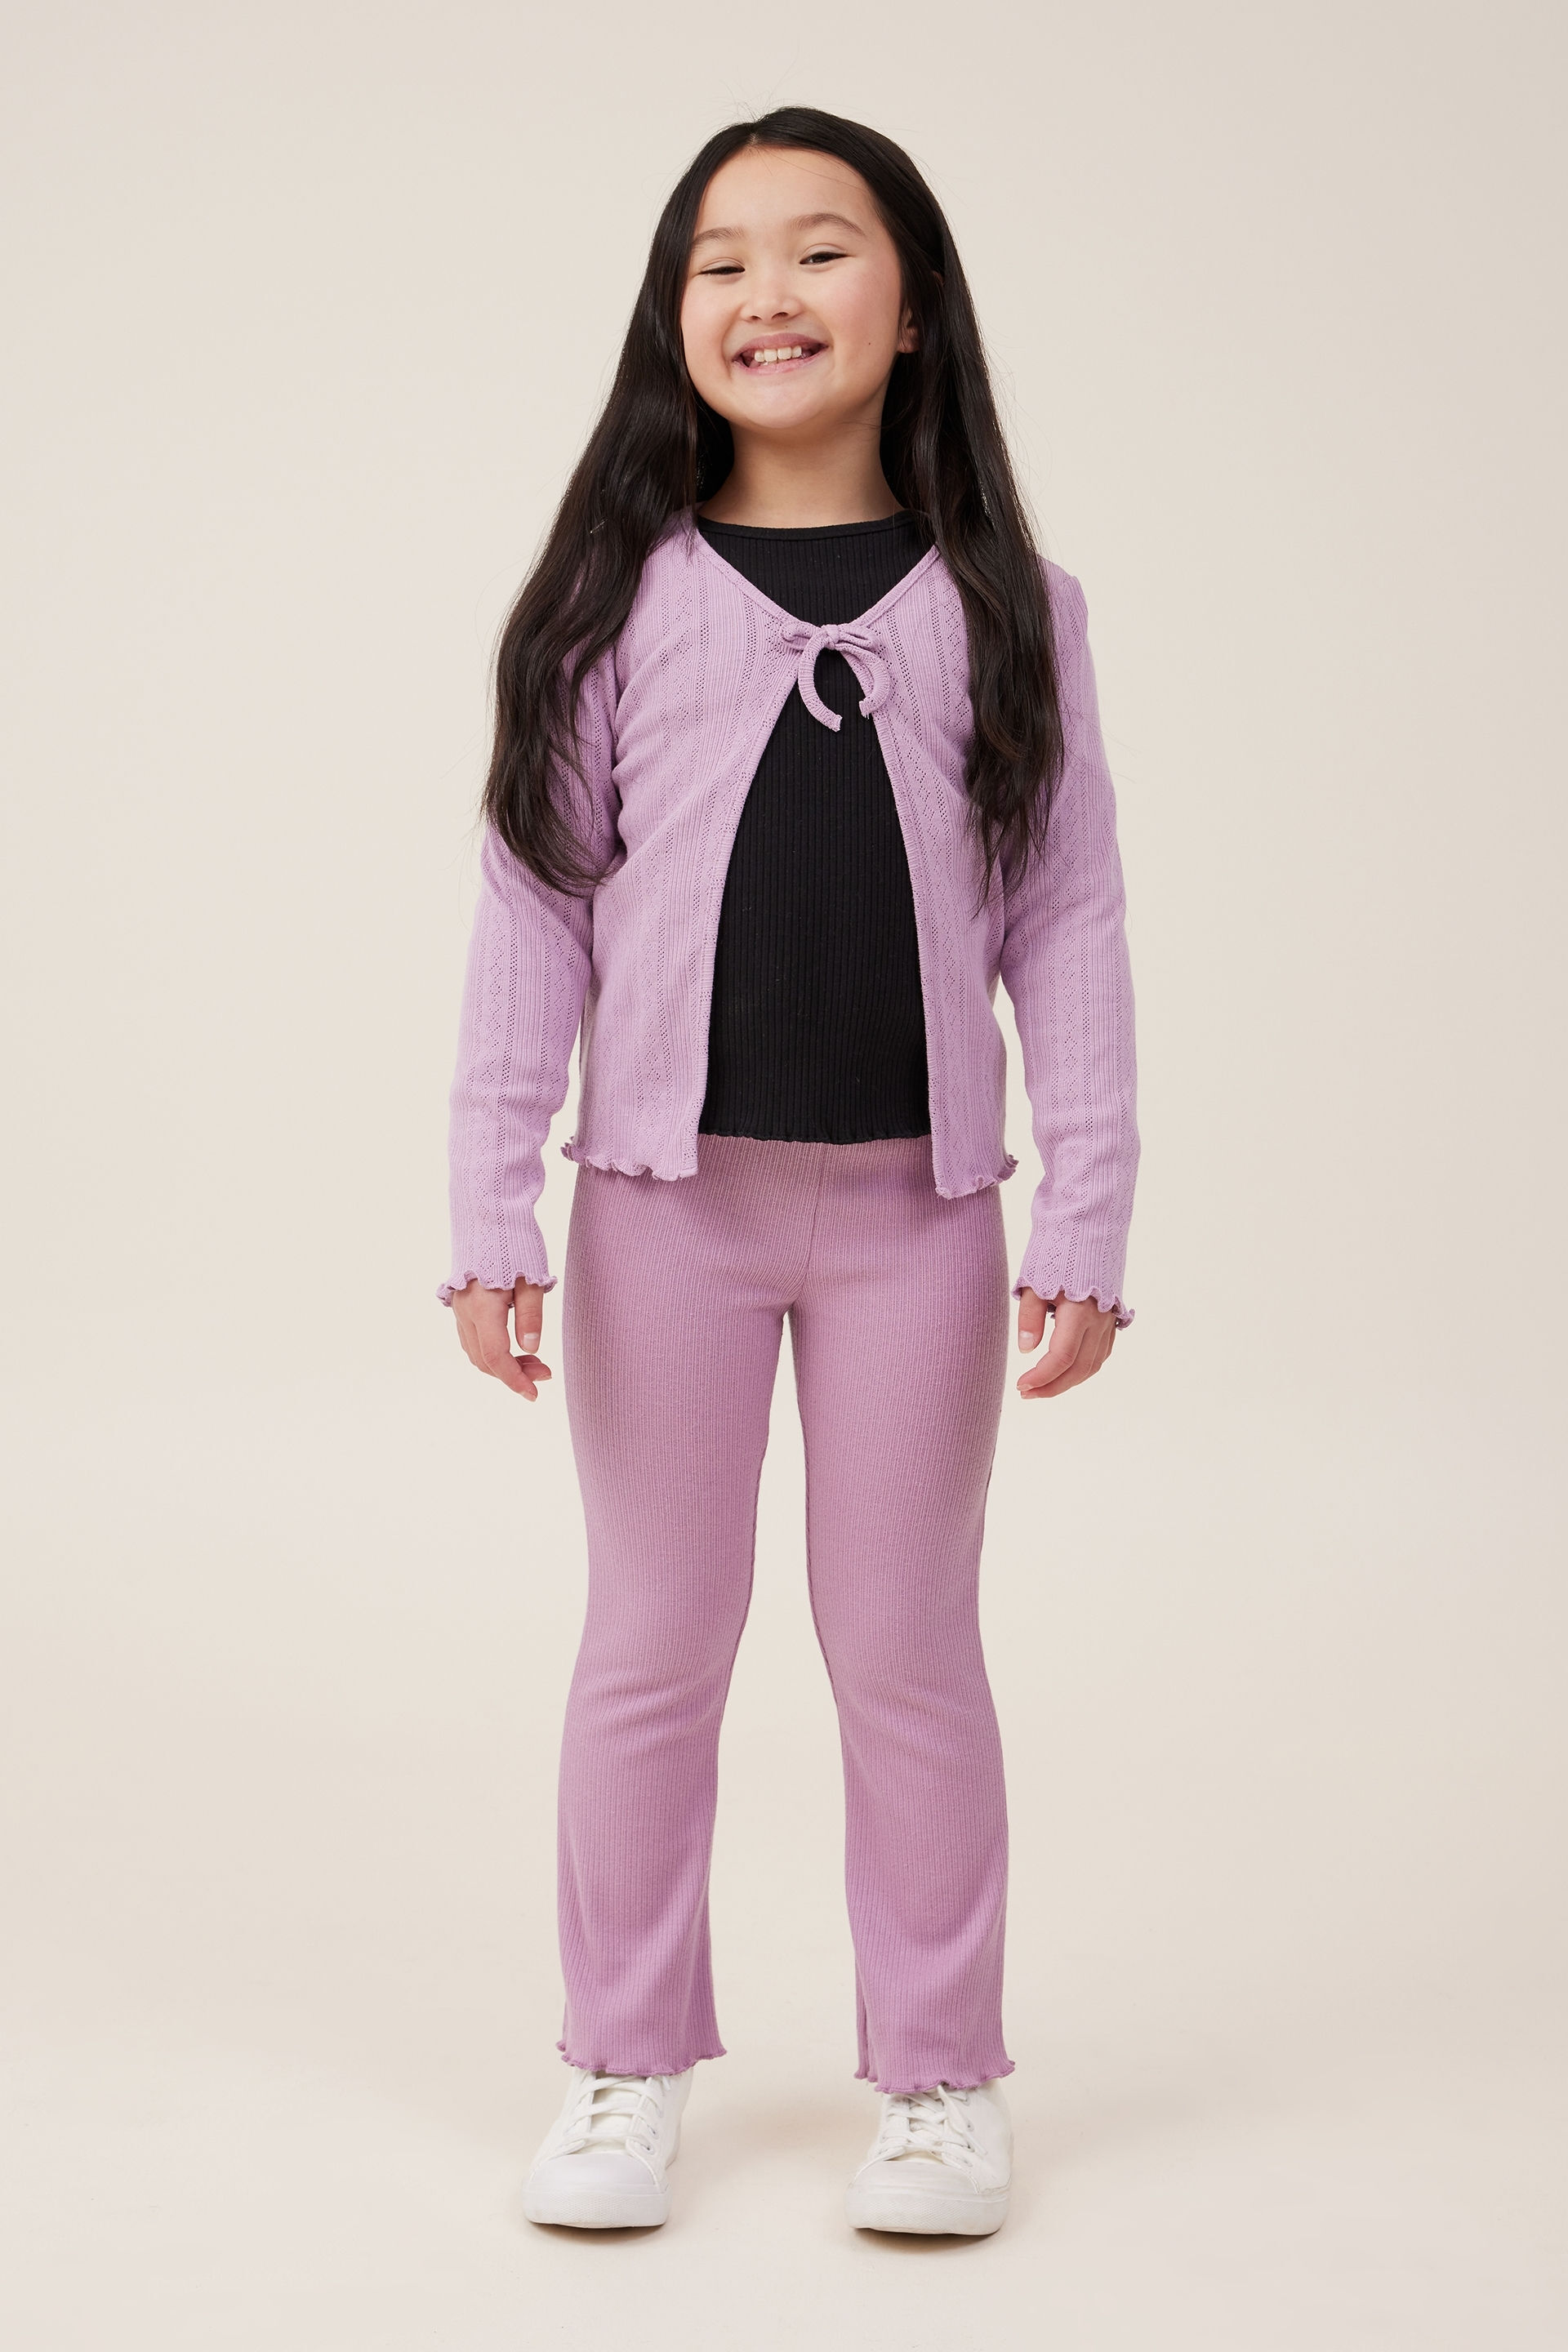 Buy Tik Tok Wears Kids Girls Cotton Printed Leggings Multicolored Pack of 5  (2 Years - 3 Years, Multicolor) at Amazon.in